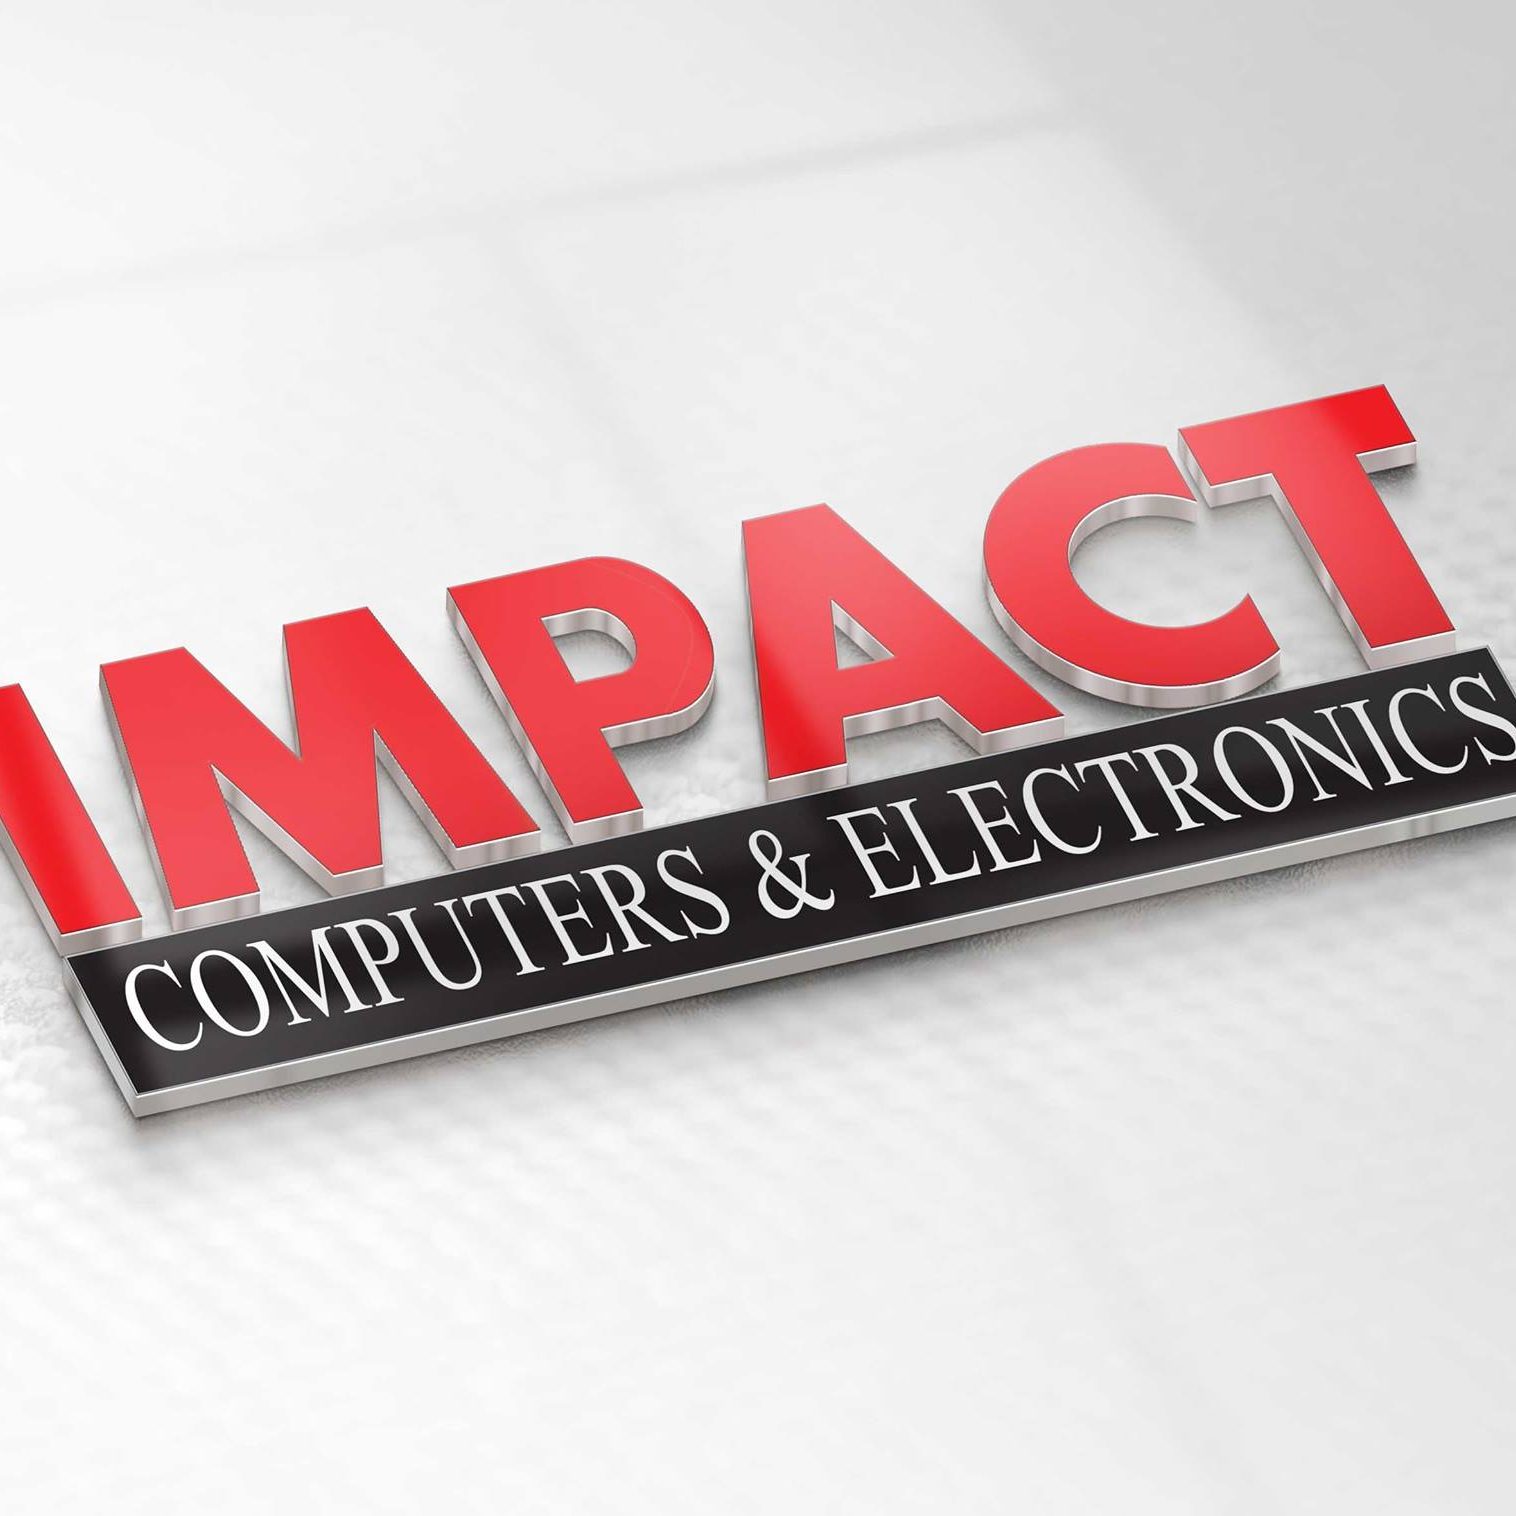 Impact Computers